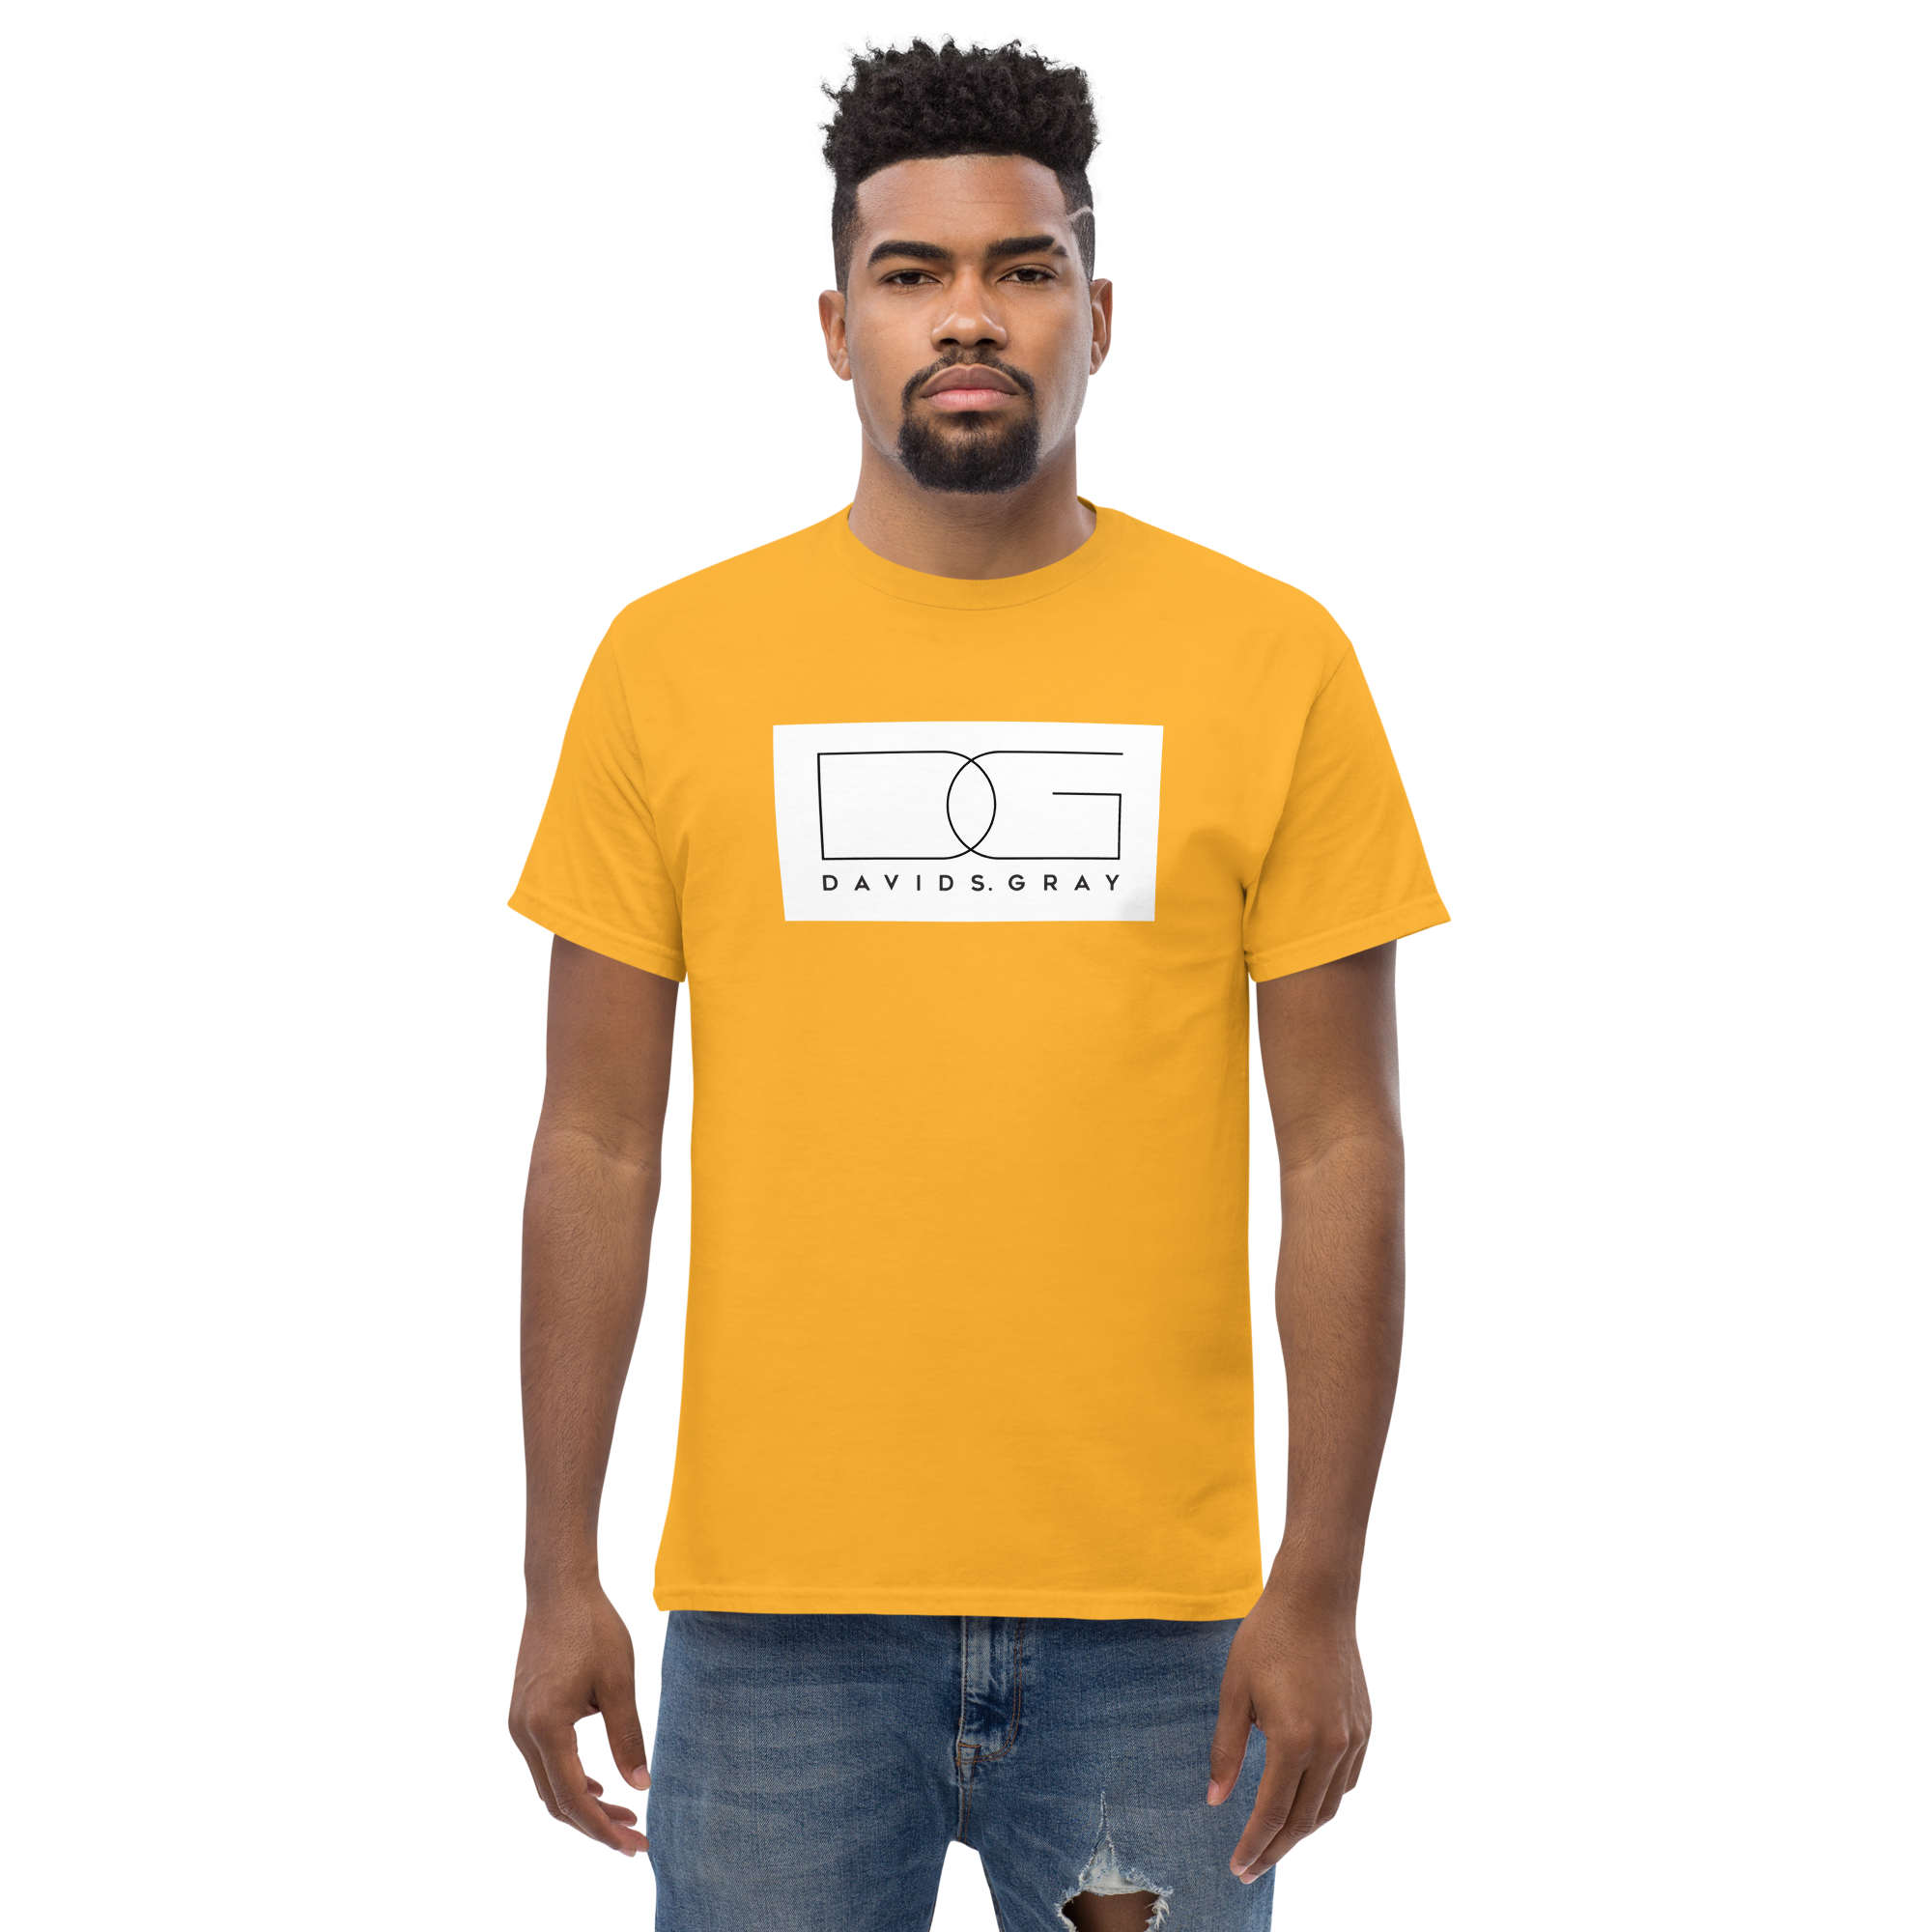 David S Gray - Short-Sleeve Unisex T-Shirt